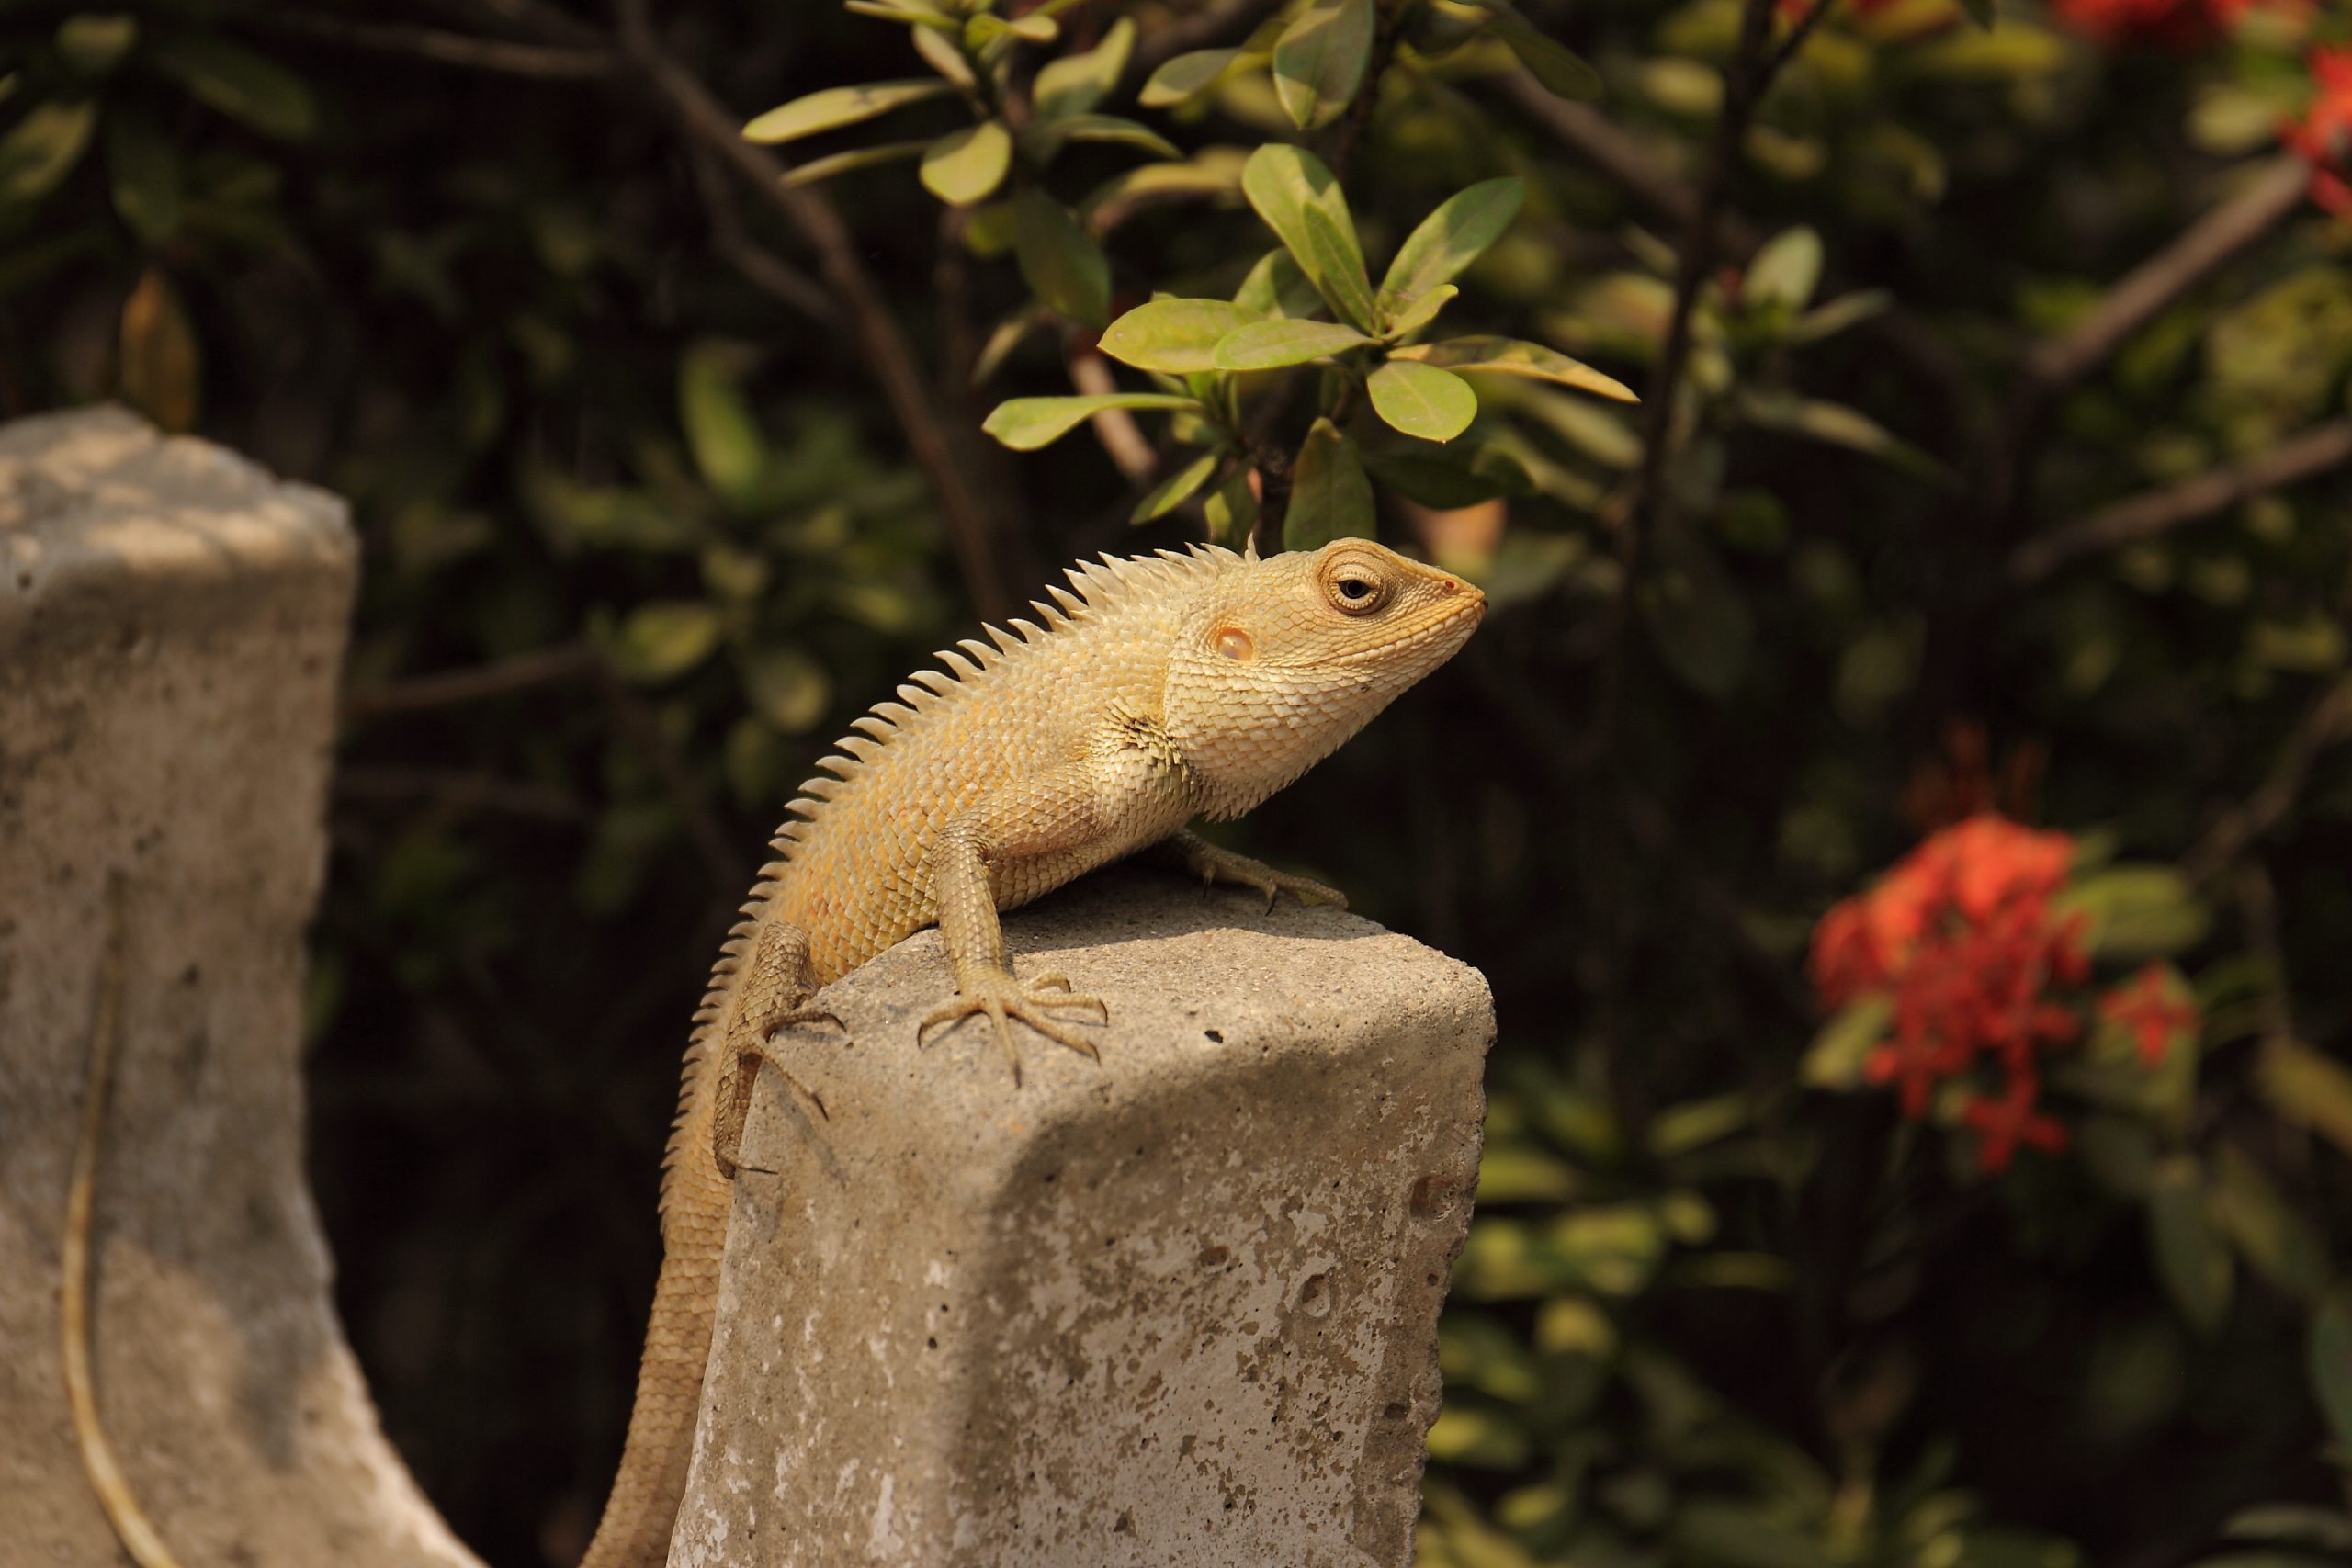 A chameleon on a stone